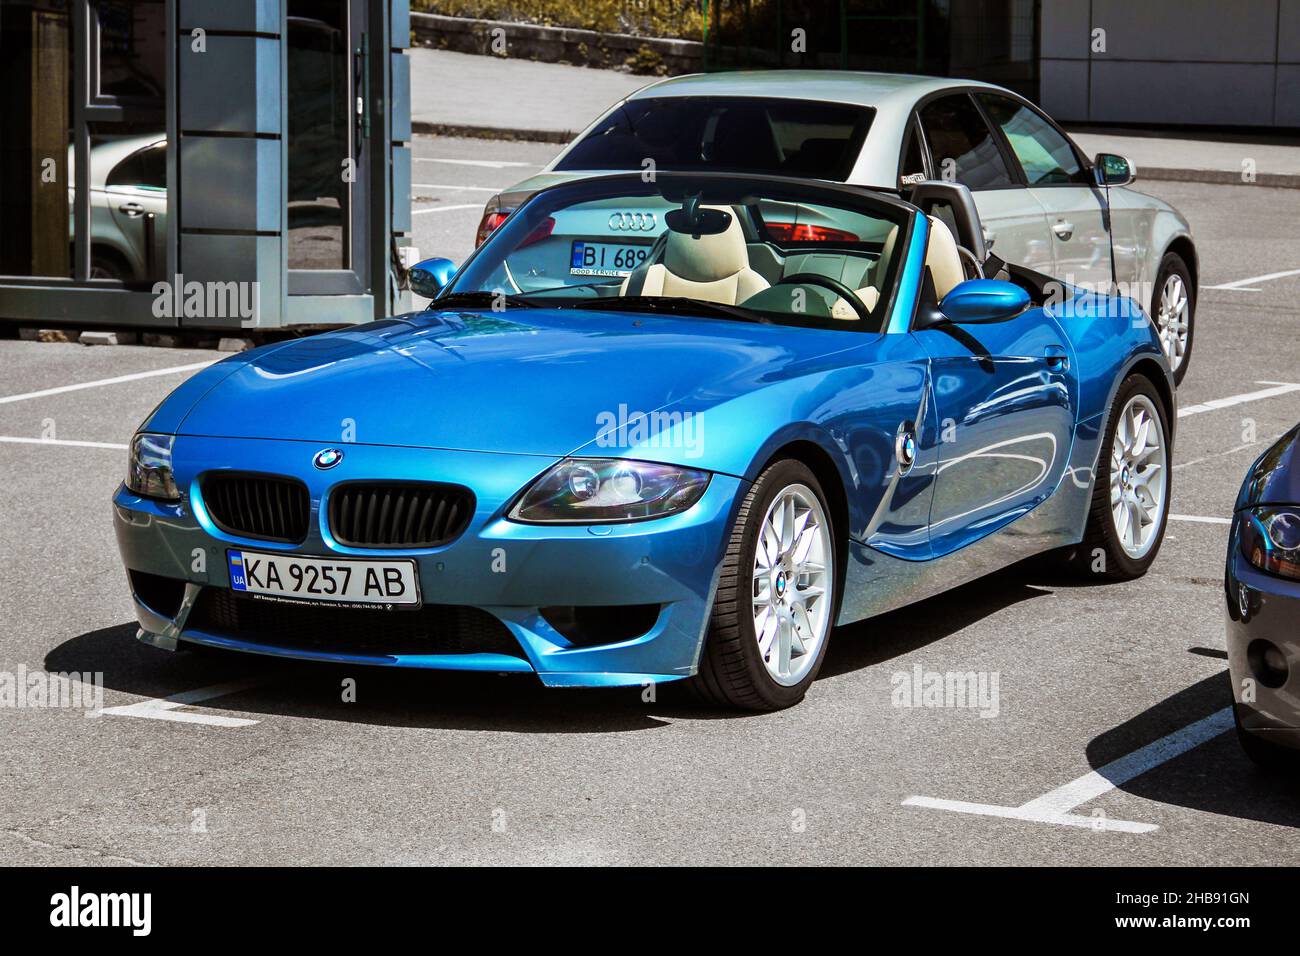 Kiev, Ukraine - May 22, 2021: Blue German BMW Z4 Roadster parked in the city Stock Photo